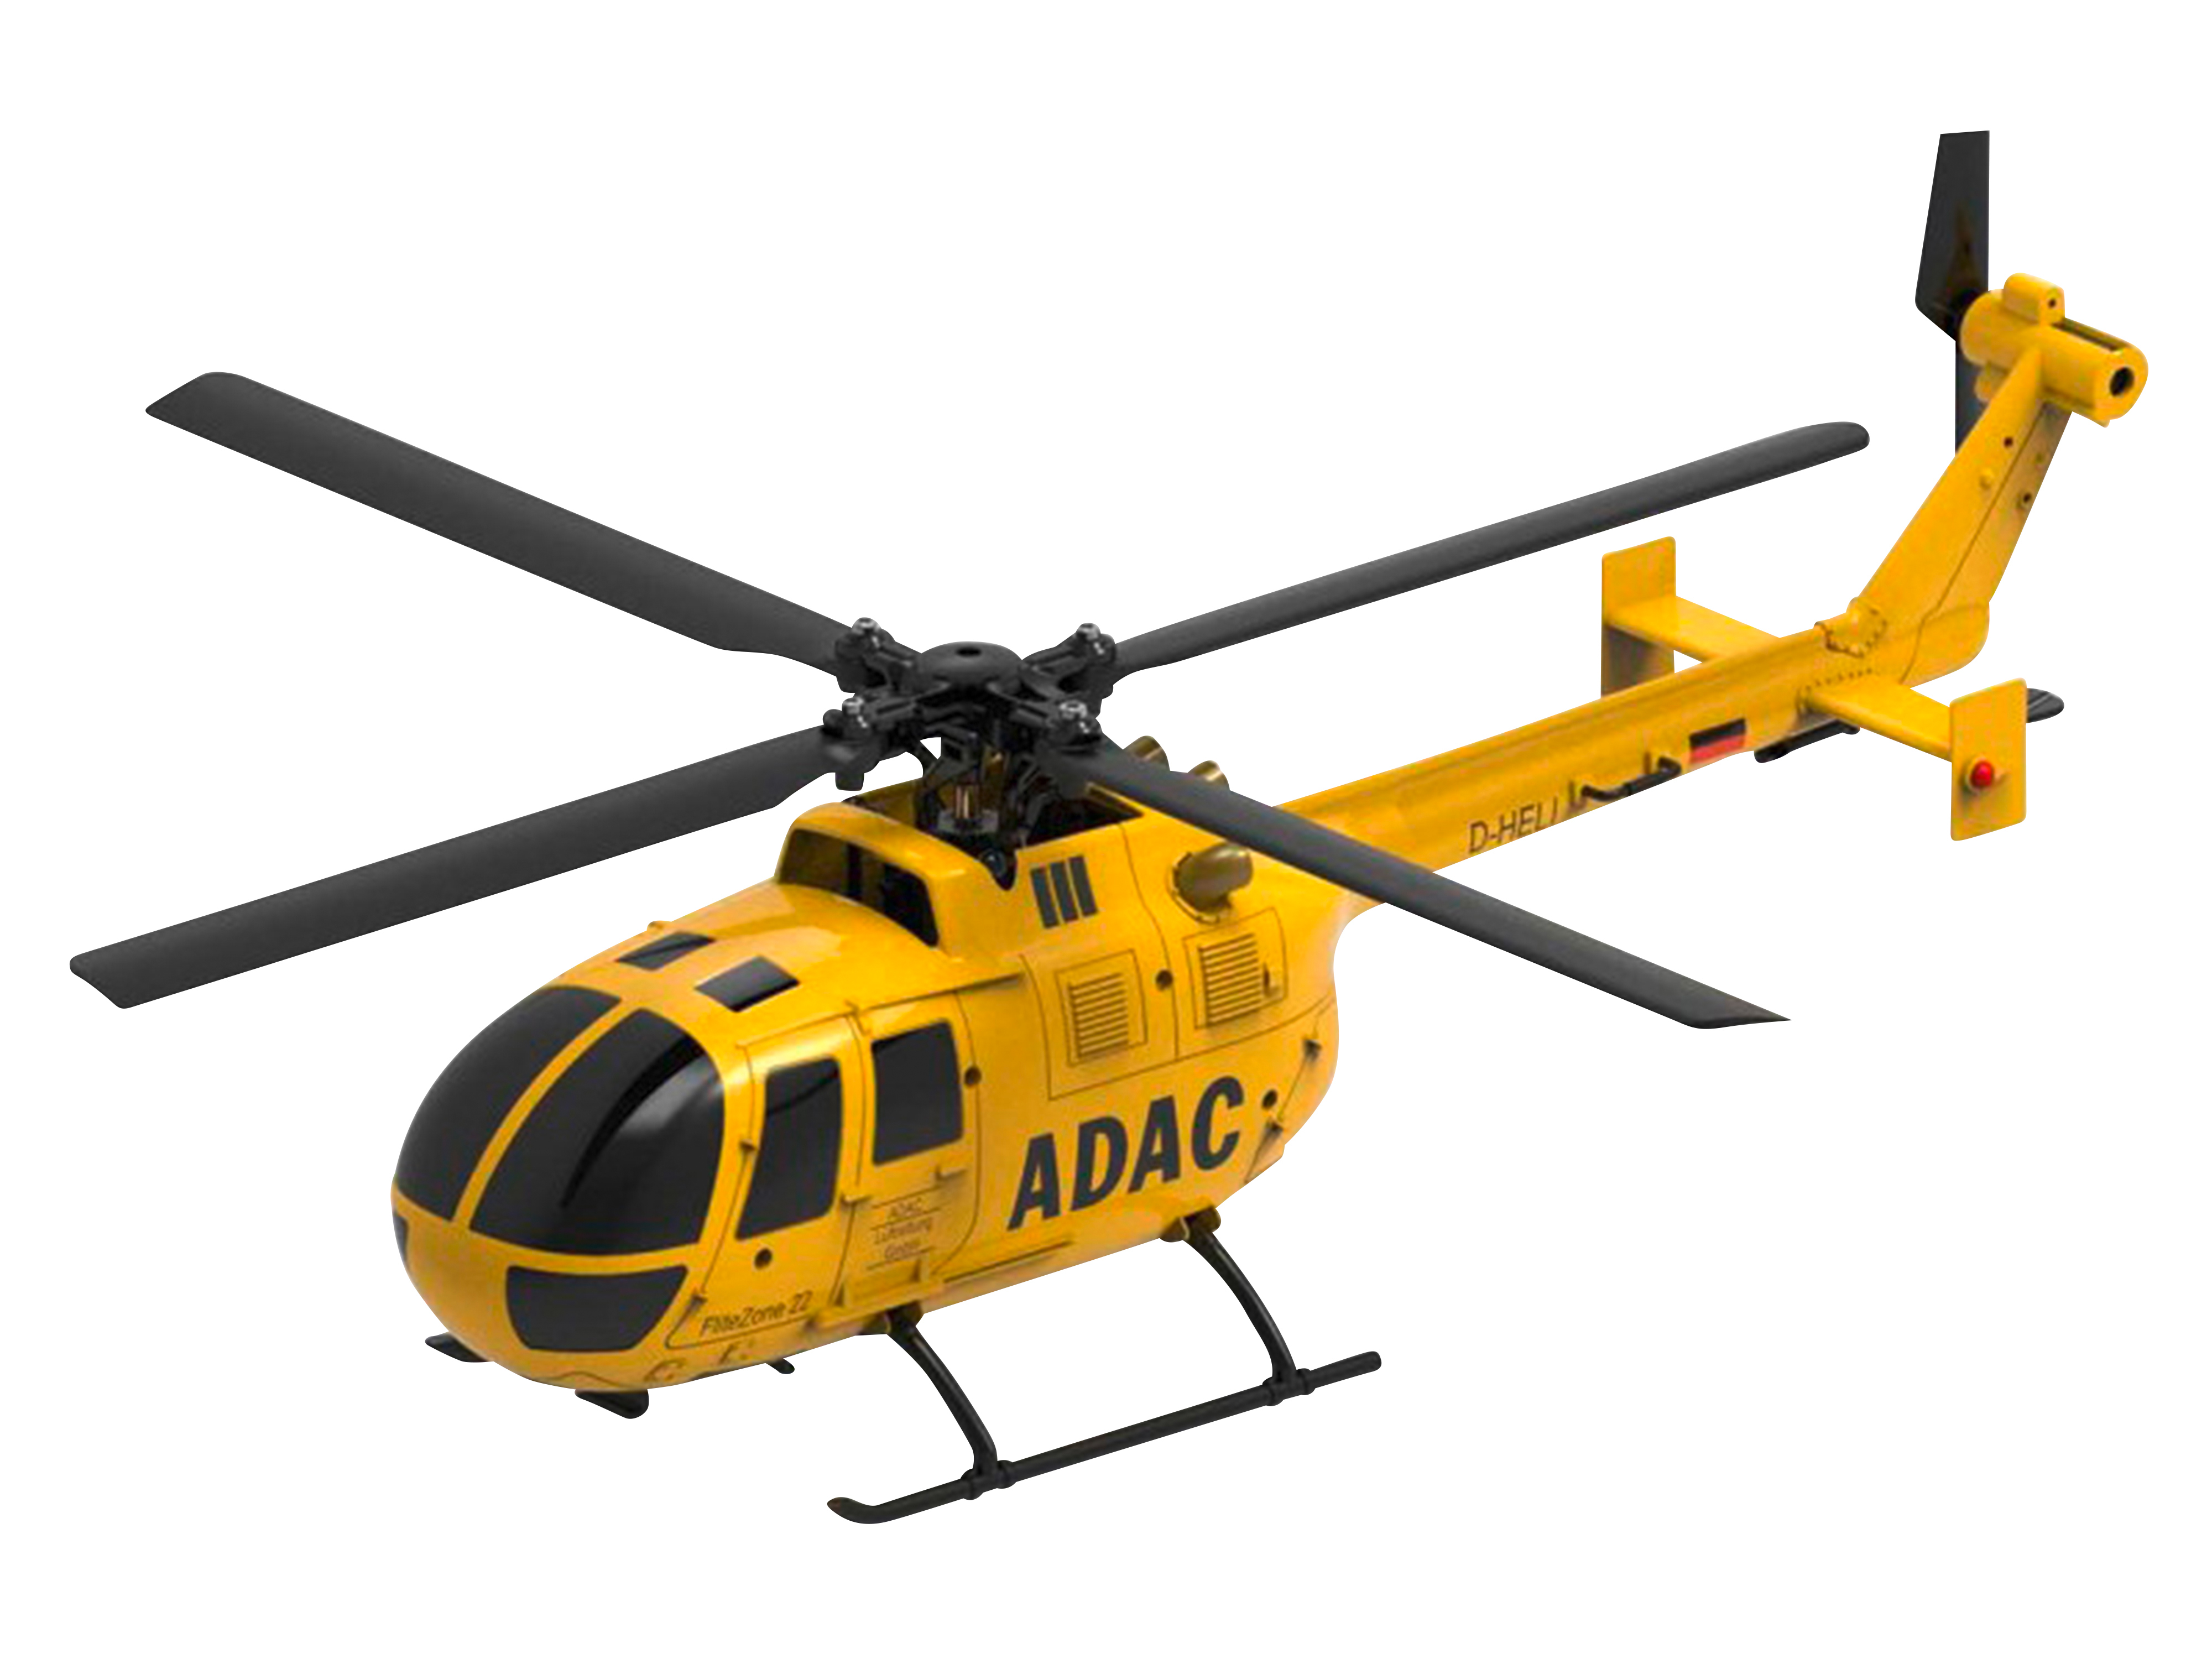 PICHLER ADAC Helicopter RTF